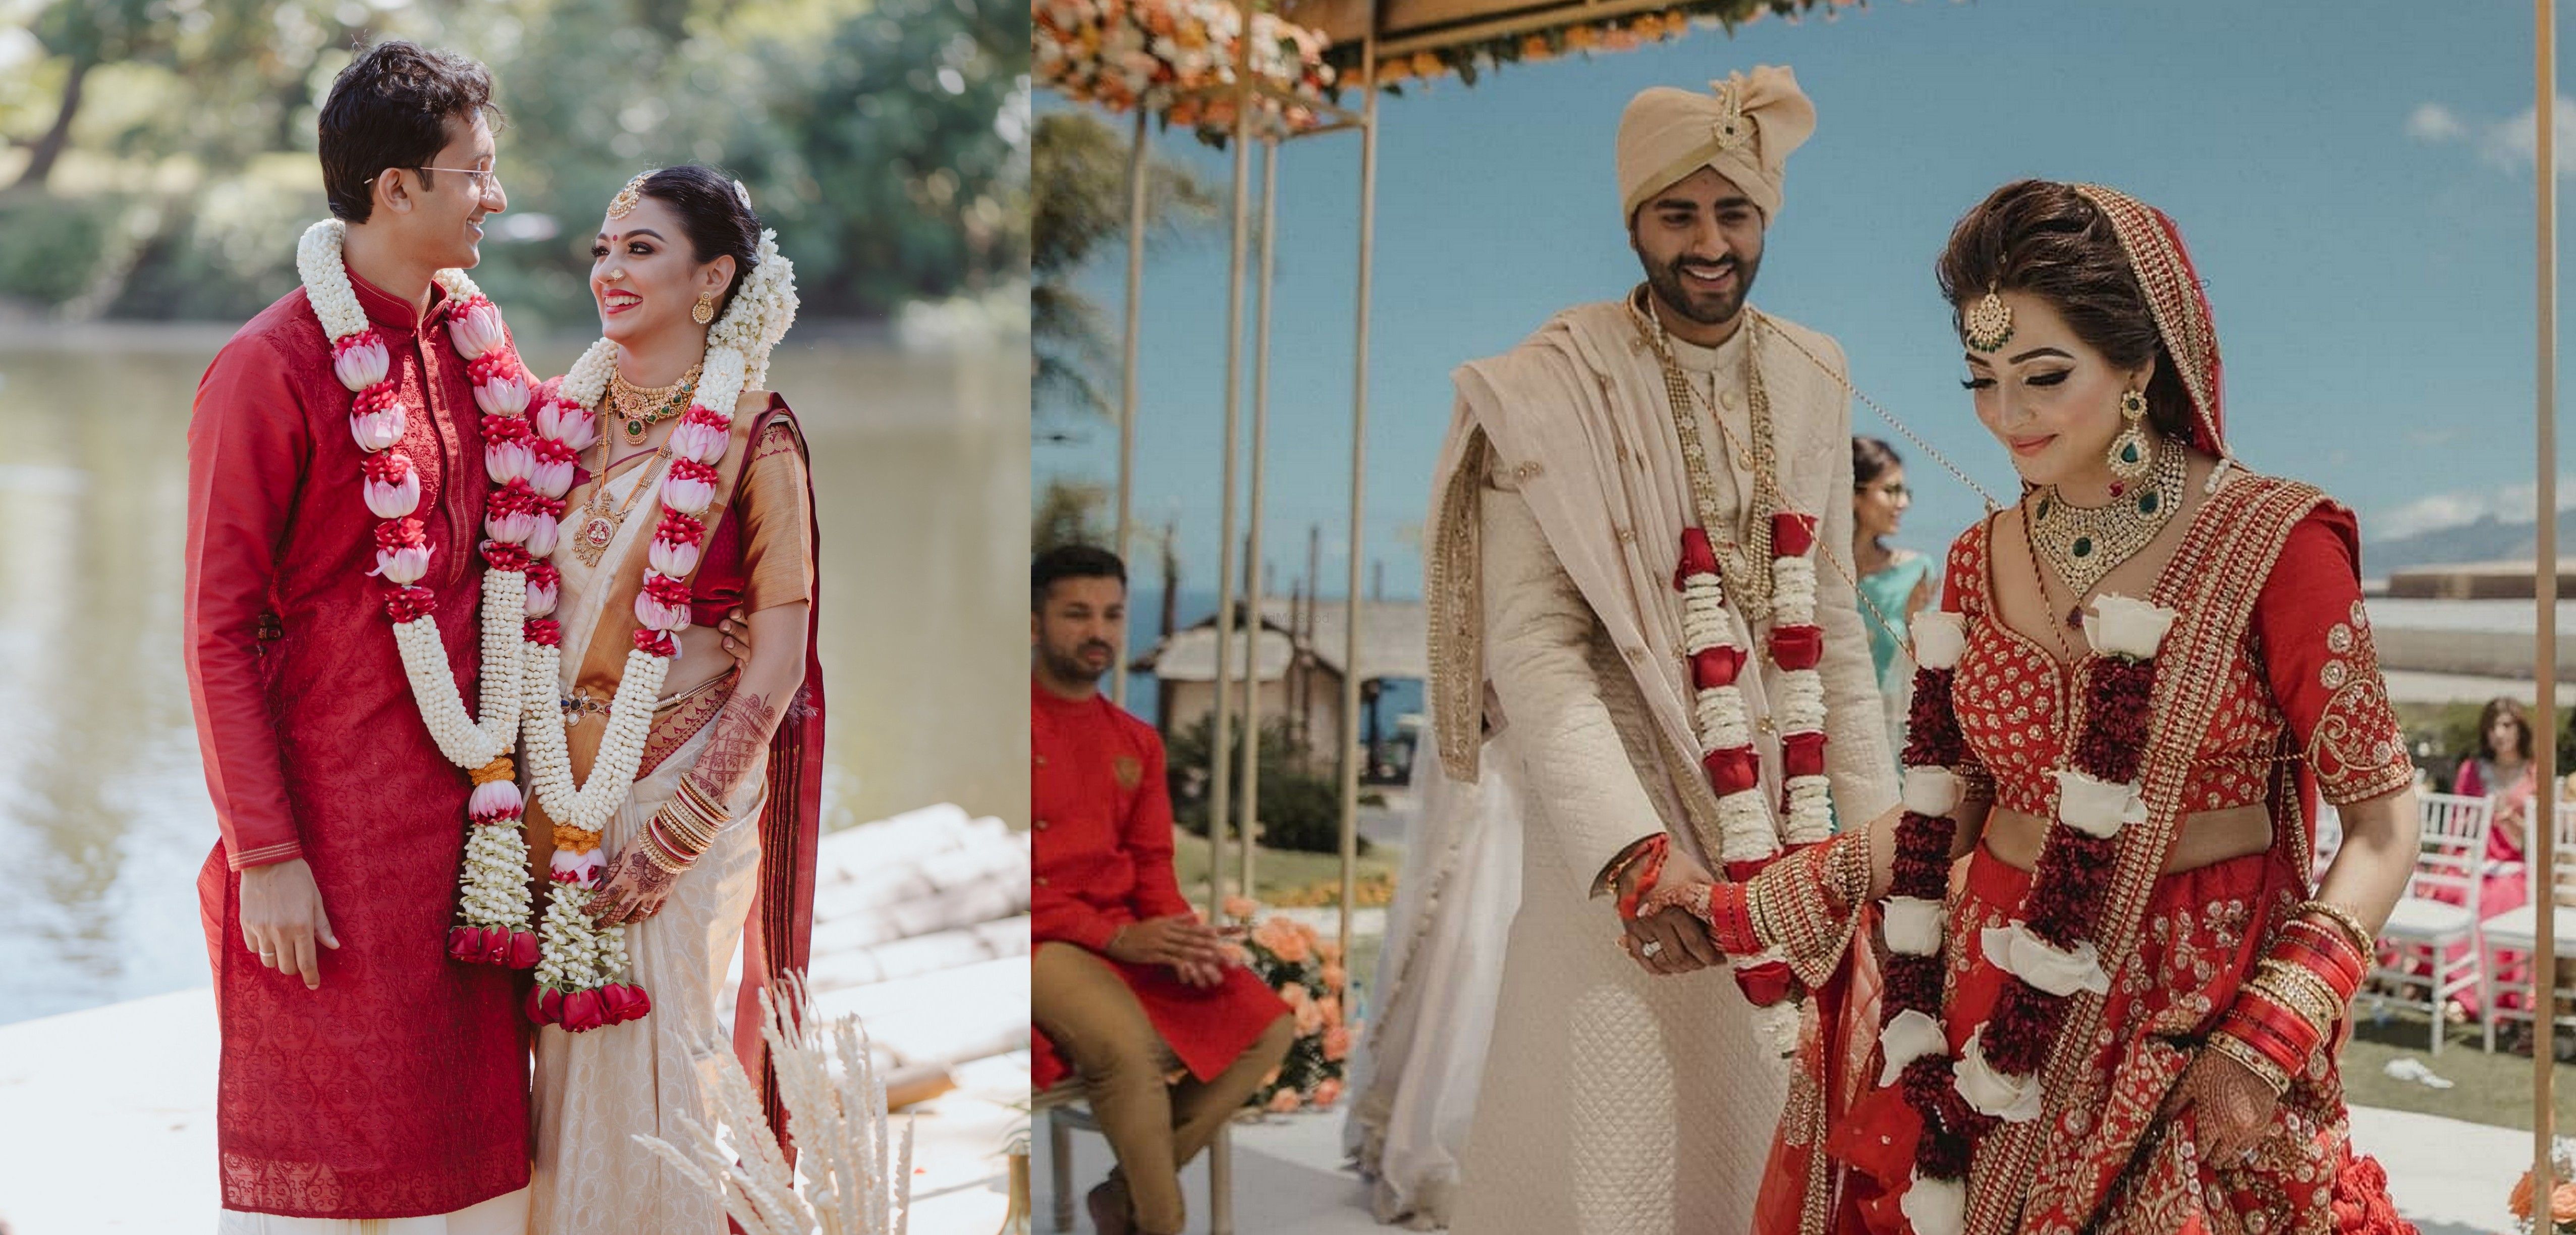 weddings, indian wedding planning online - wedmegood